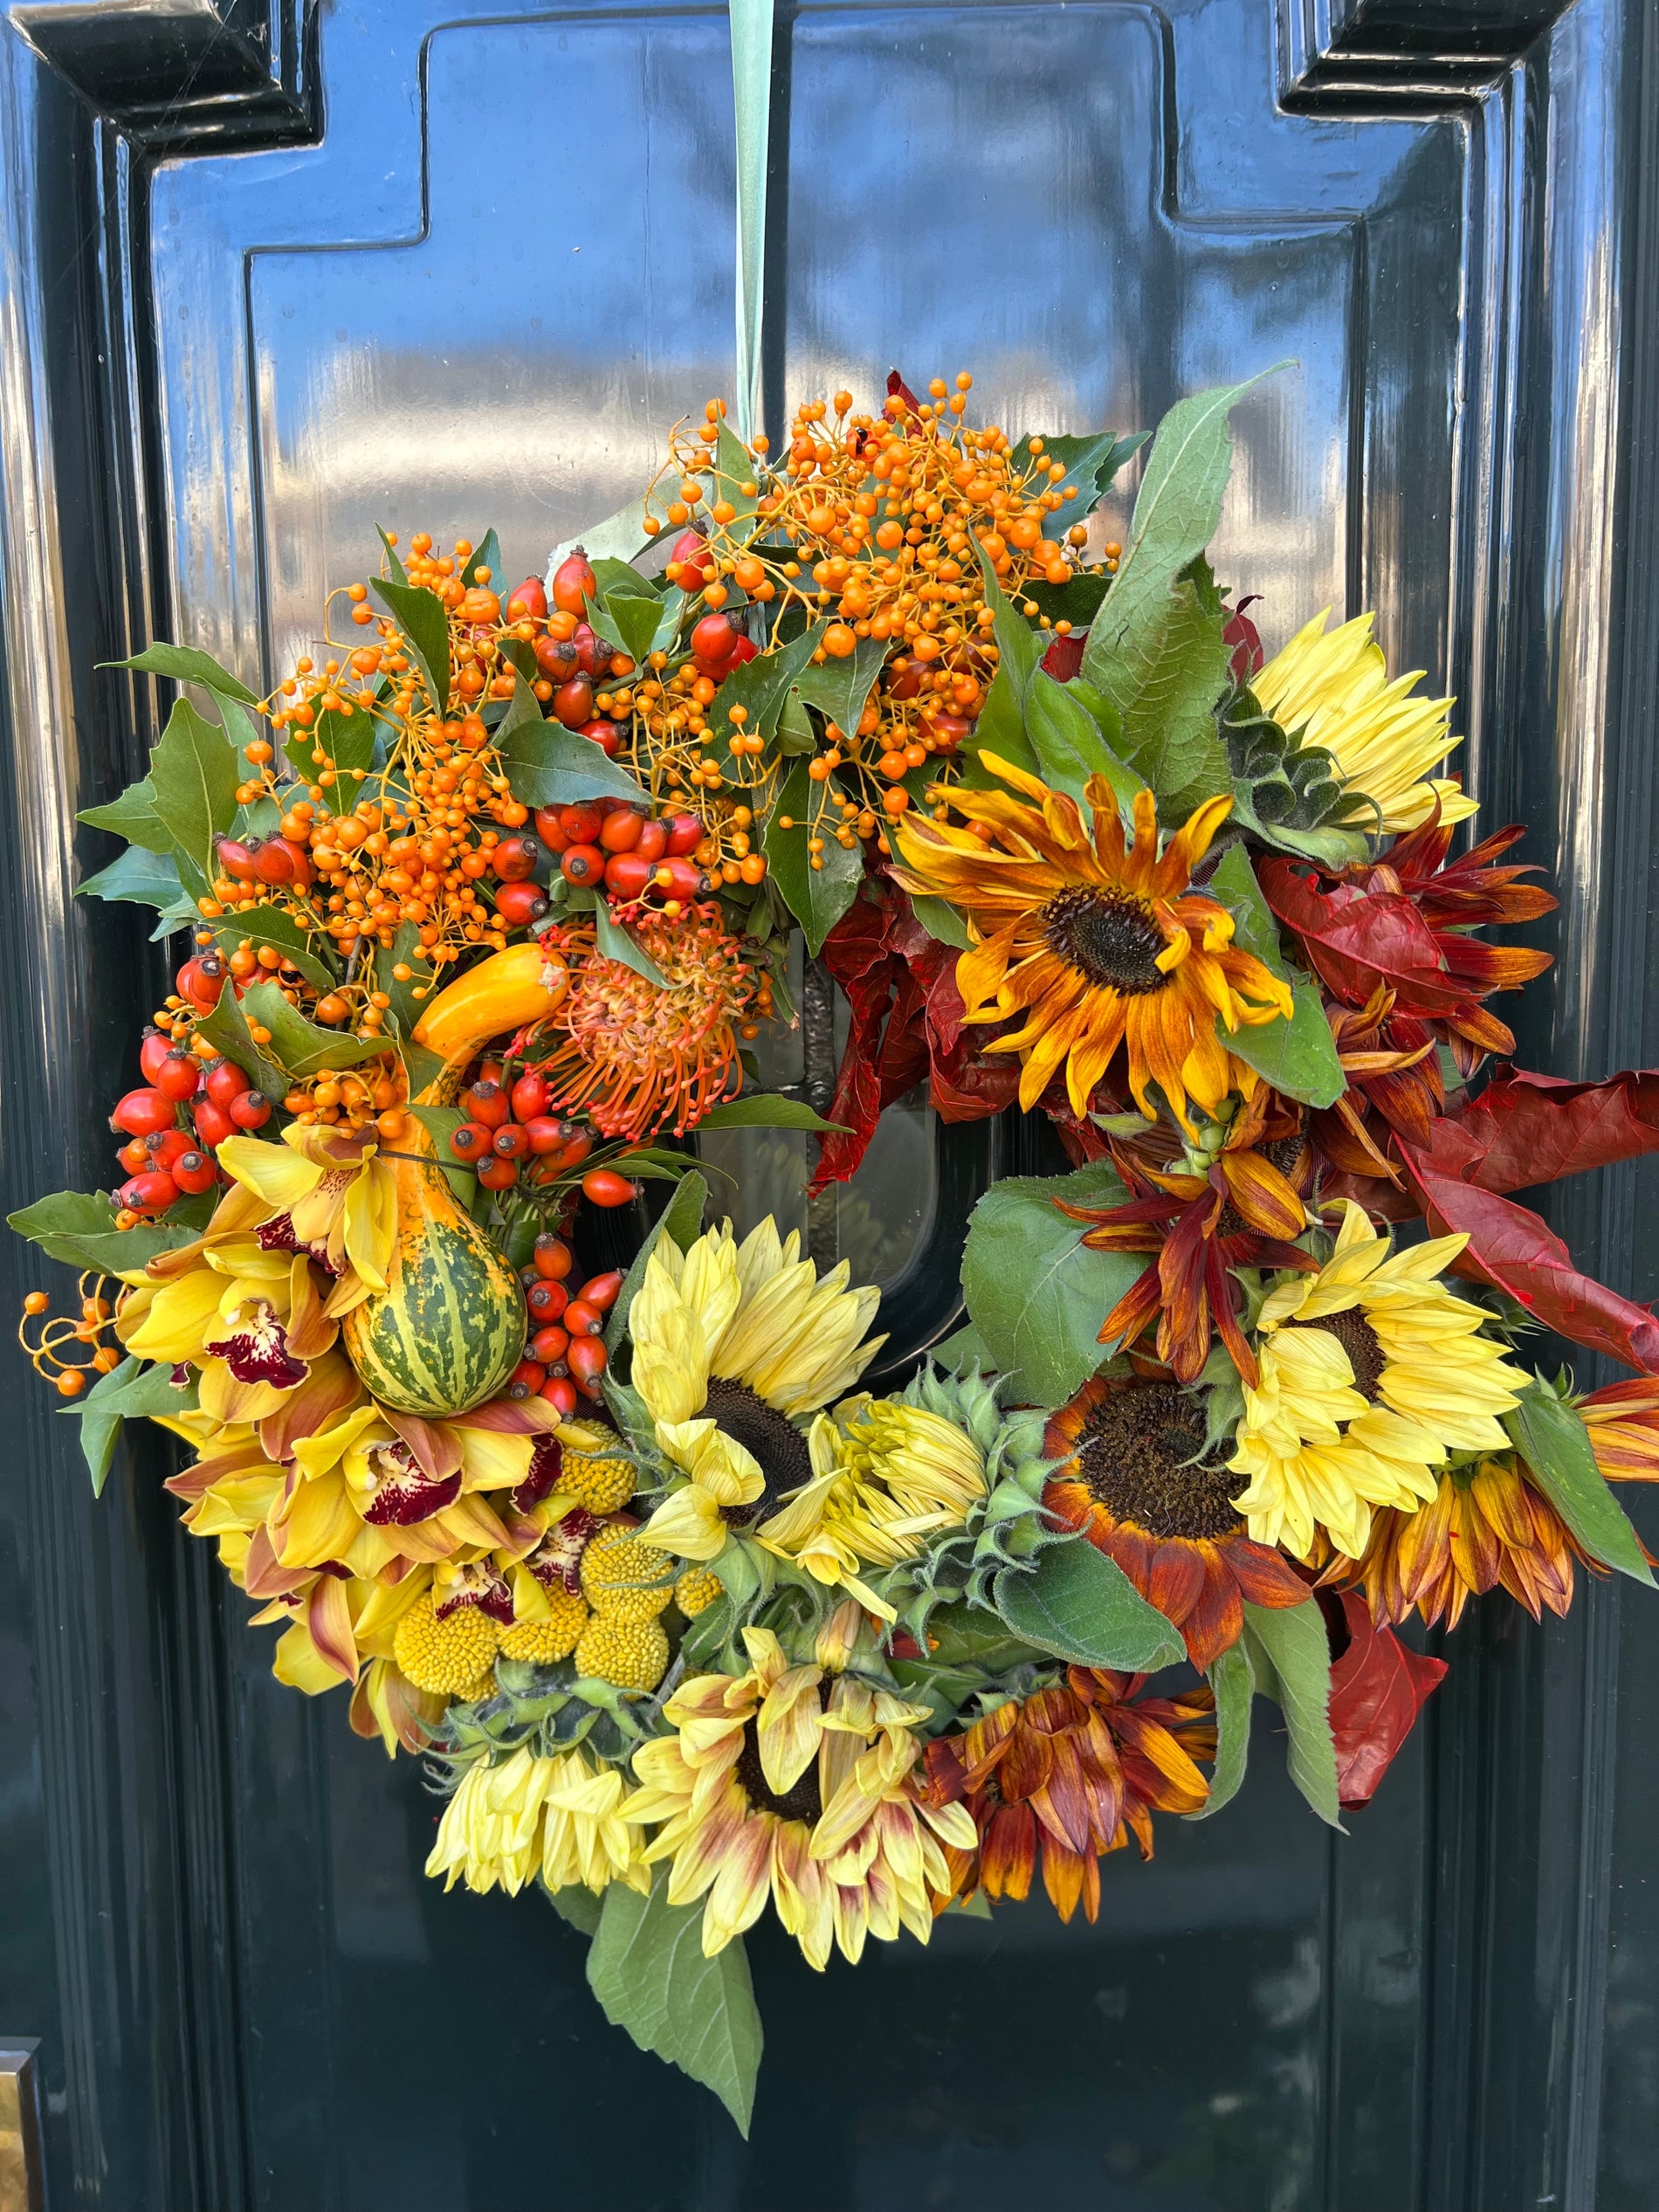 How to: Flower wreath - autumn edition